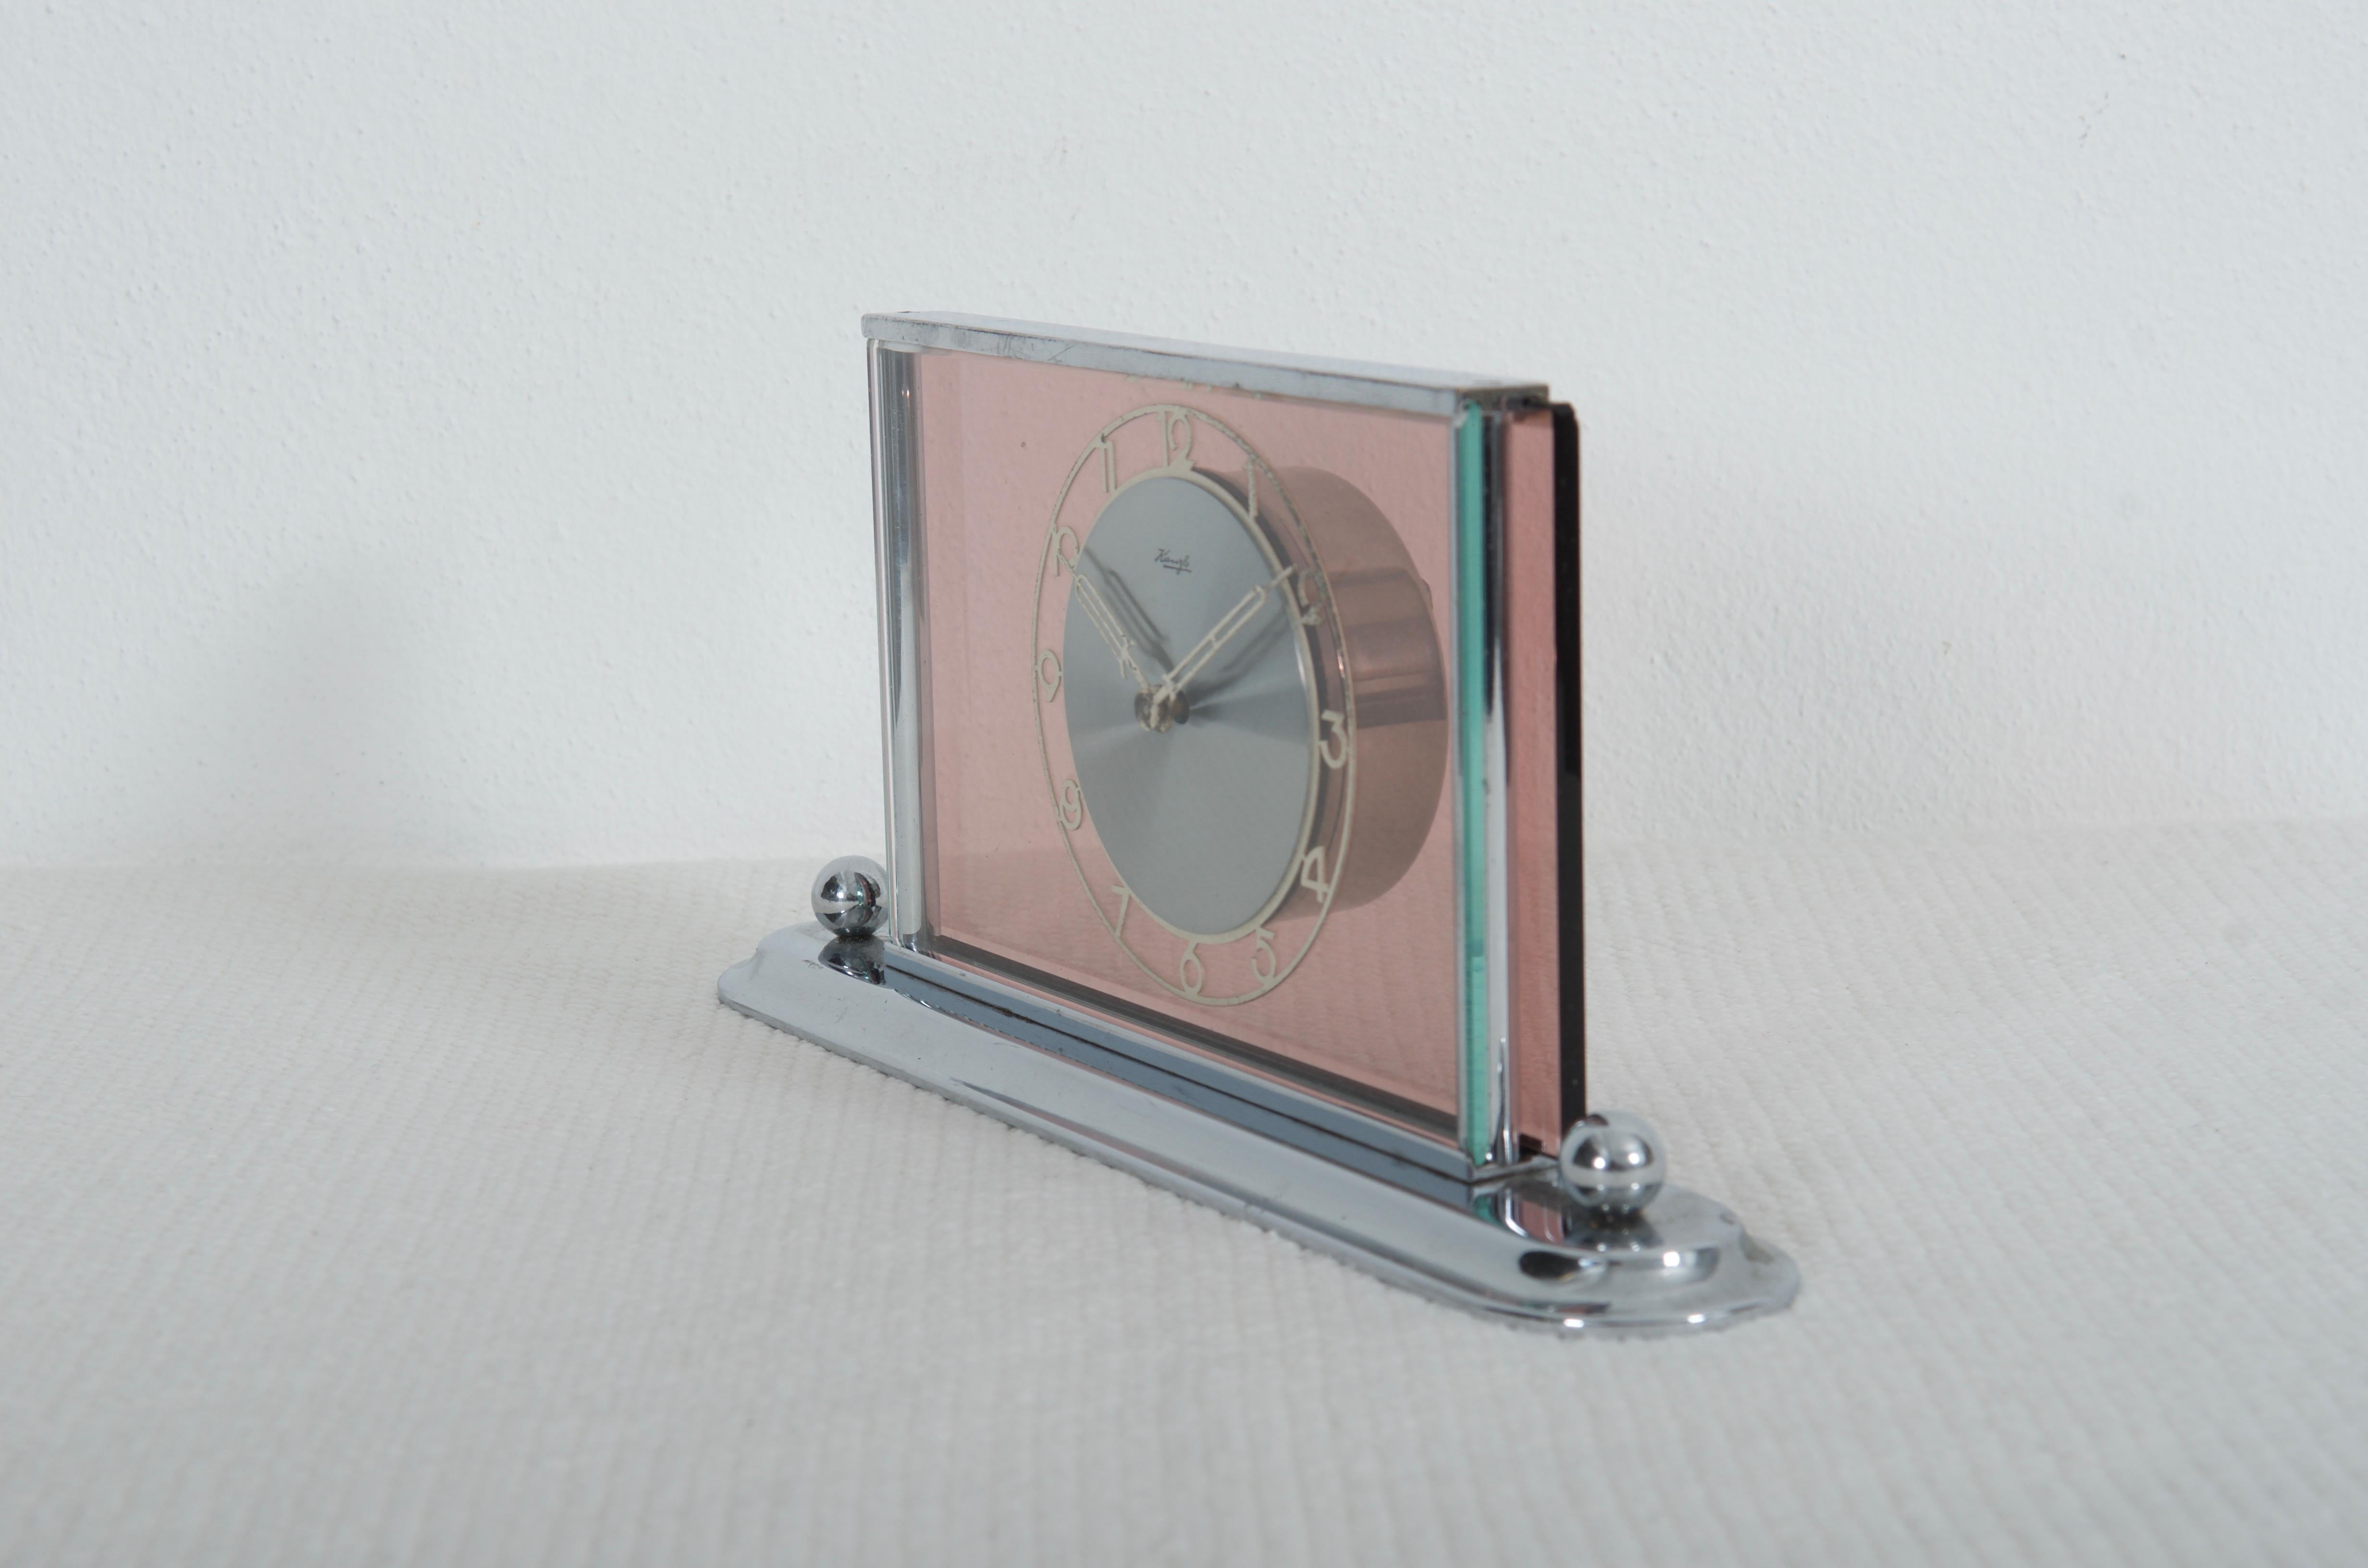 Industrial Art Deco Table Desk Clock Kienzle For Sale